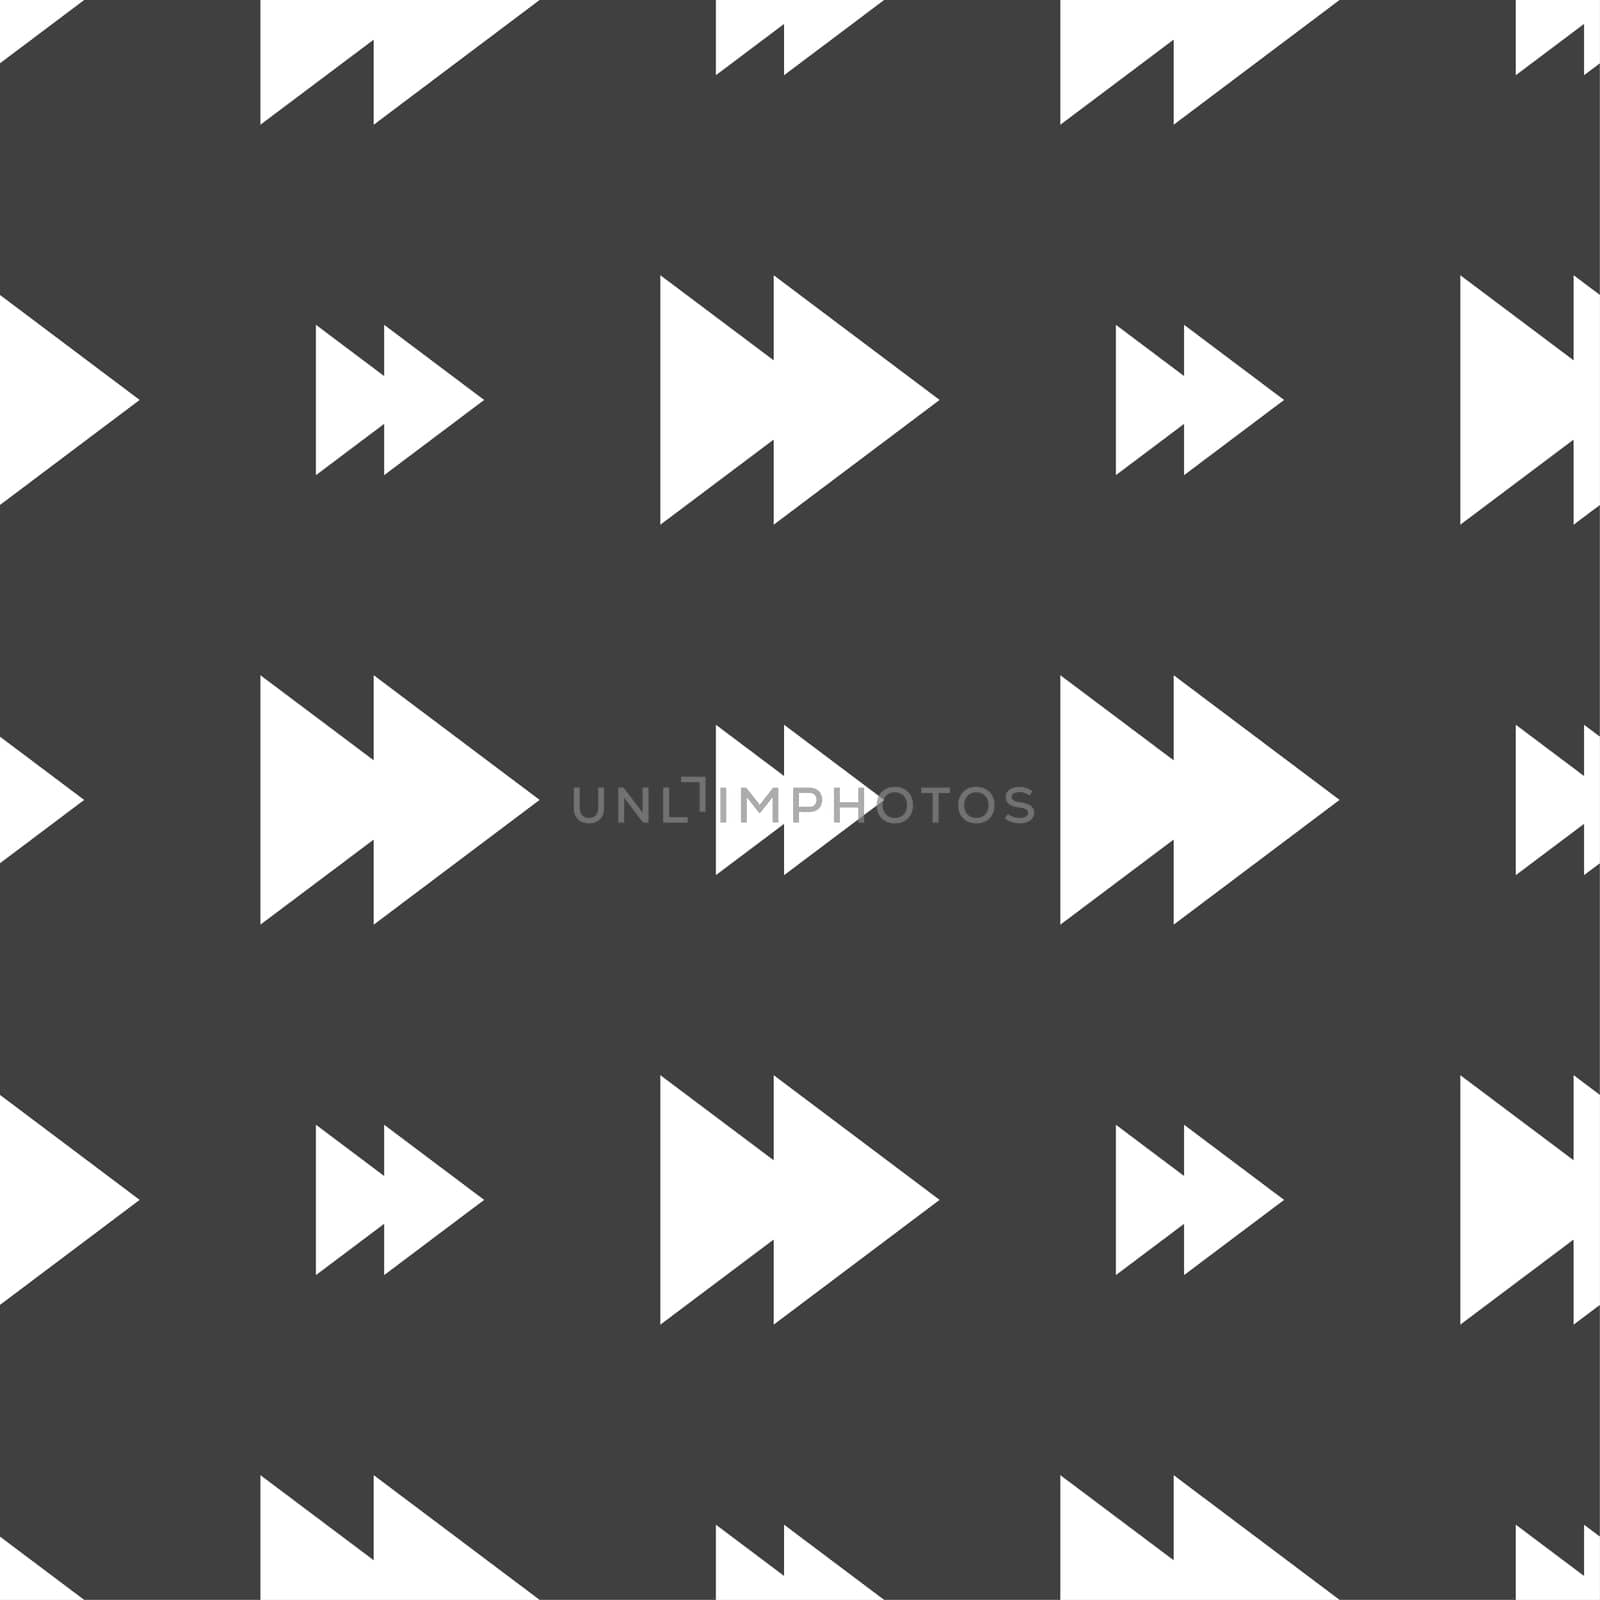 multimedia sign icon. Player navigation symbol. Seamless pattern on a gray background. illustration